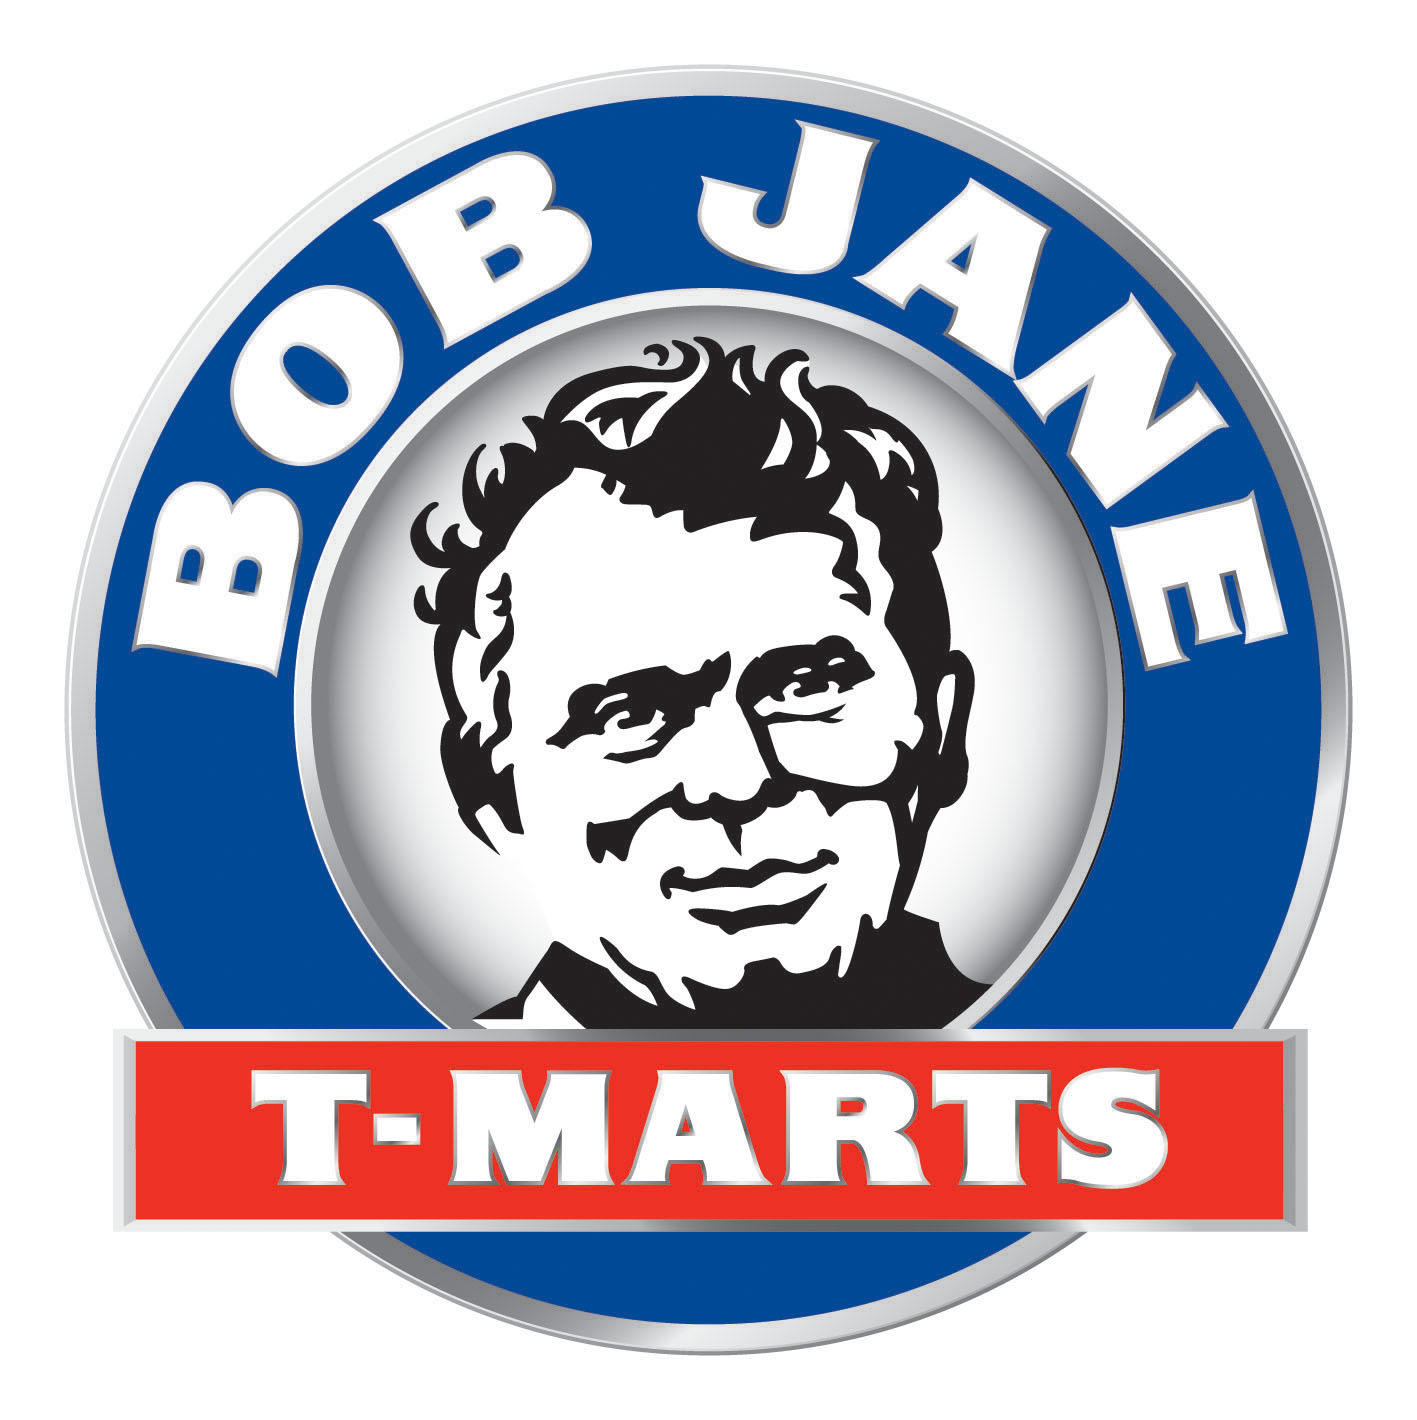 Bob Jane T-Marts Joondalup Joondalup